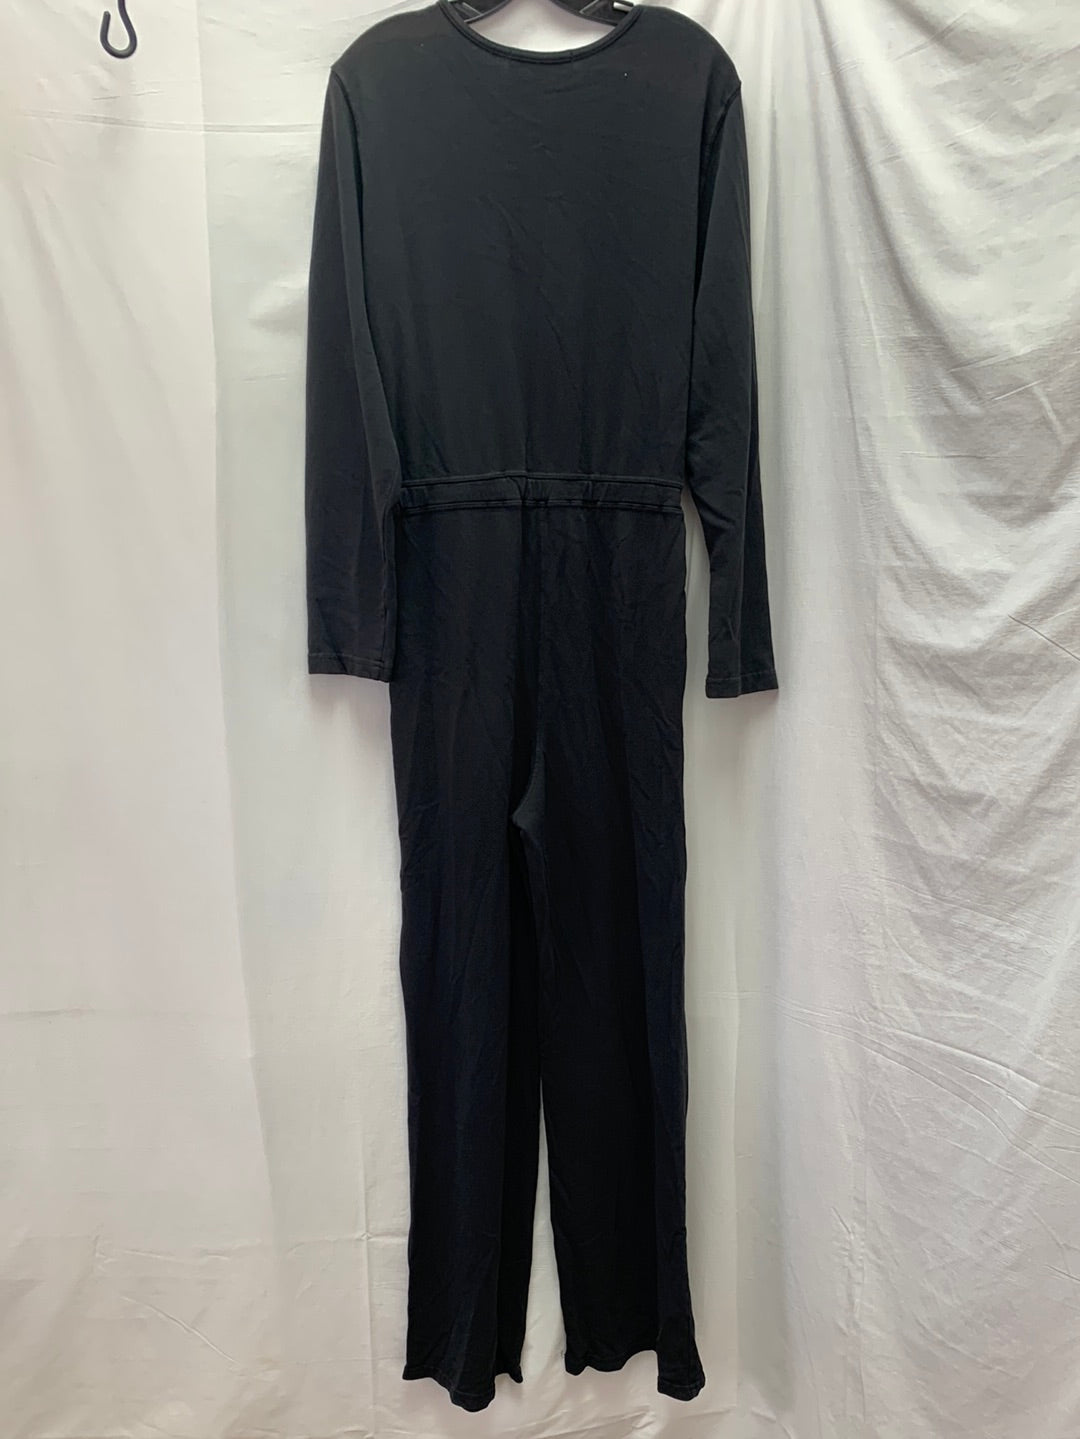 NWT - SPIRITUAL GANGSTER vintage black Long Sleeve Button Down Jumpsuit - Size M